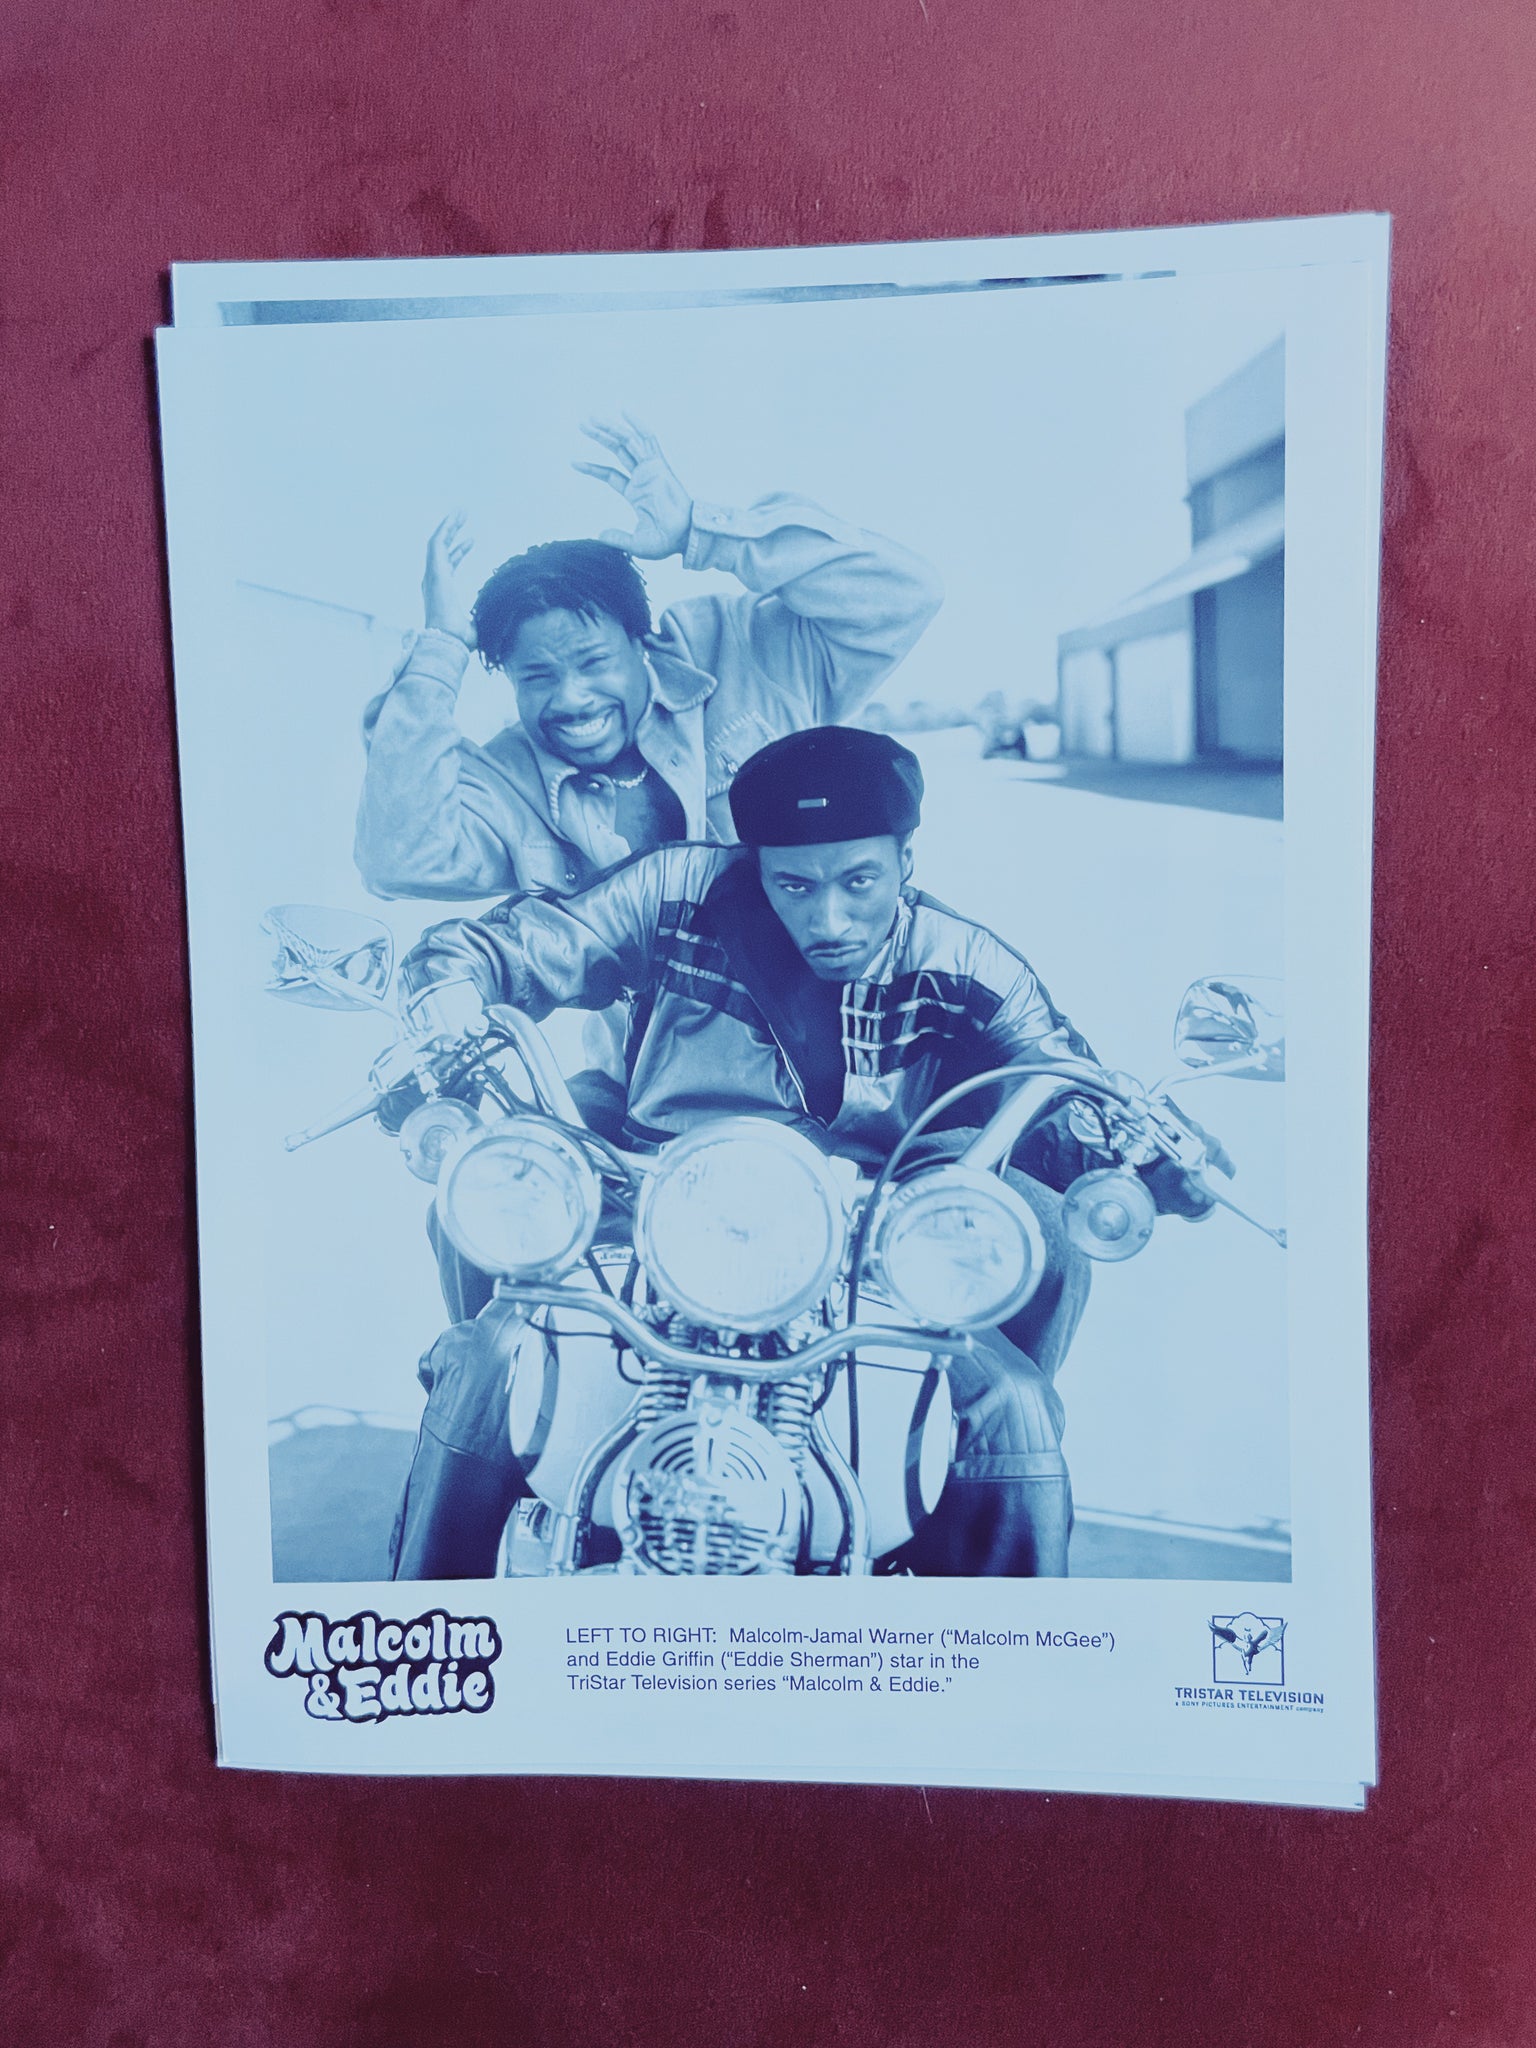 Vintage “Malcolm & Eddie” TV Studio Still / Photo Bundle